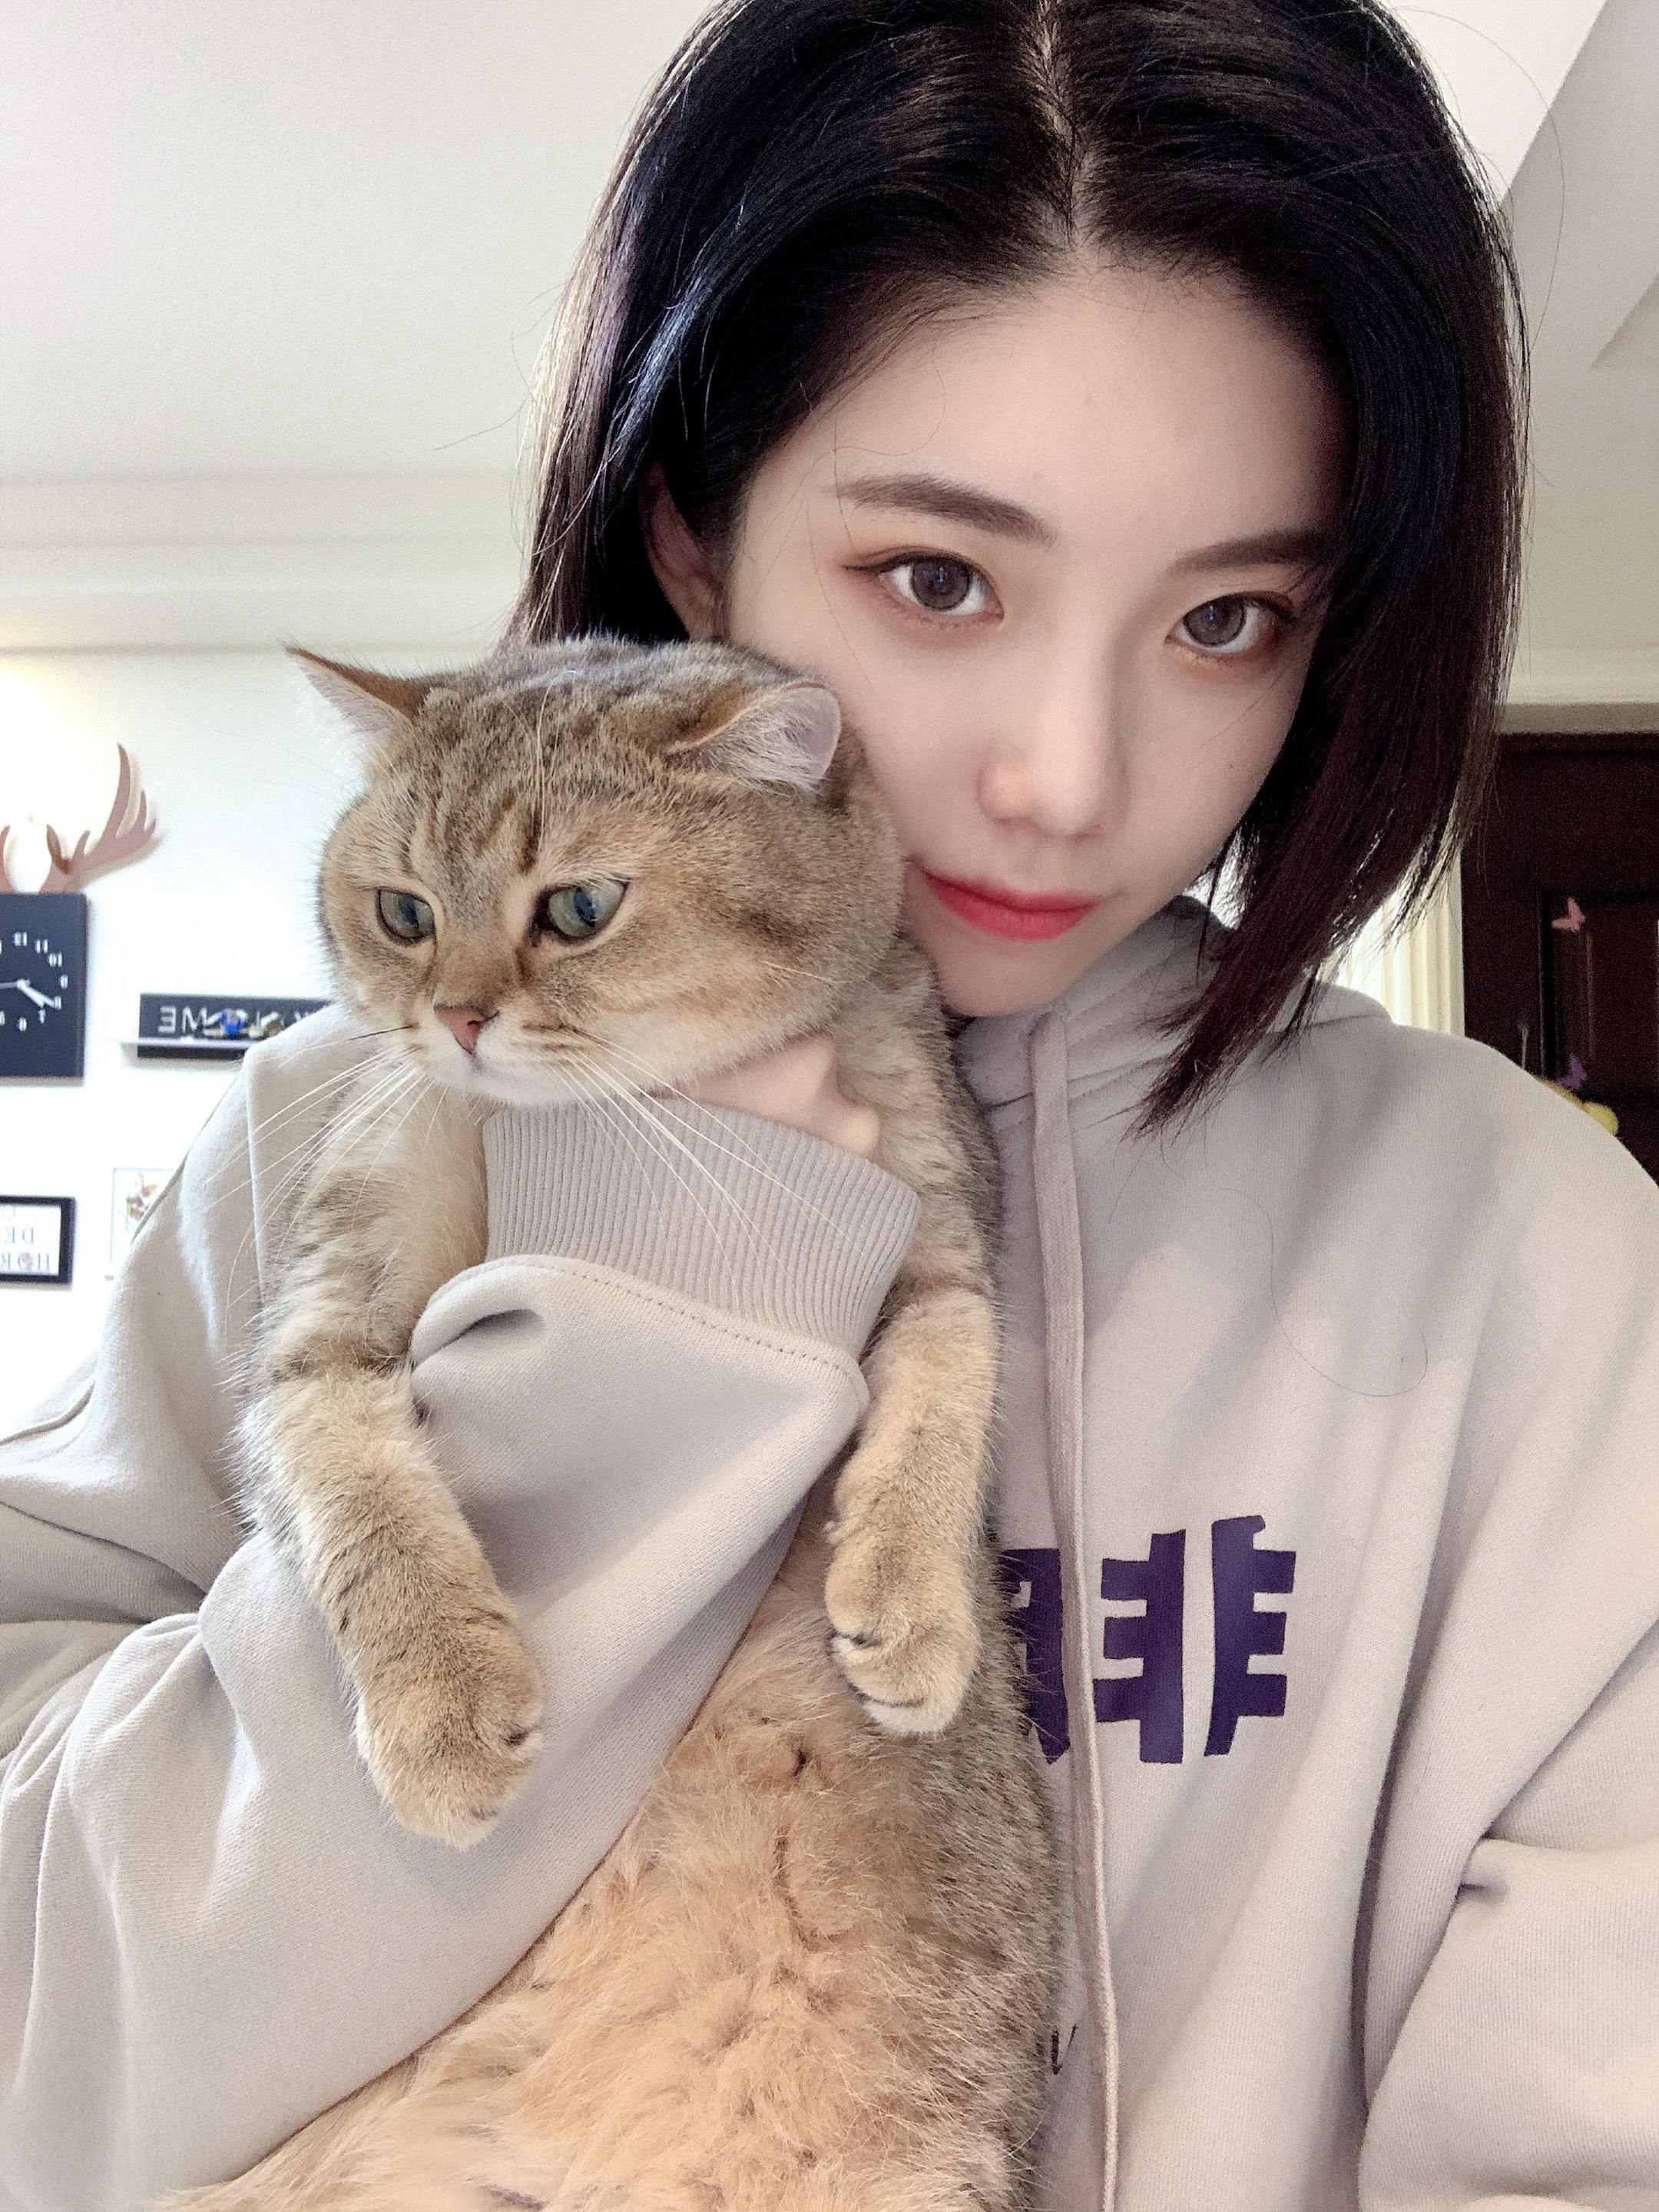 selfie of smy holding her cat